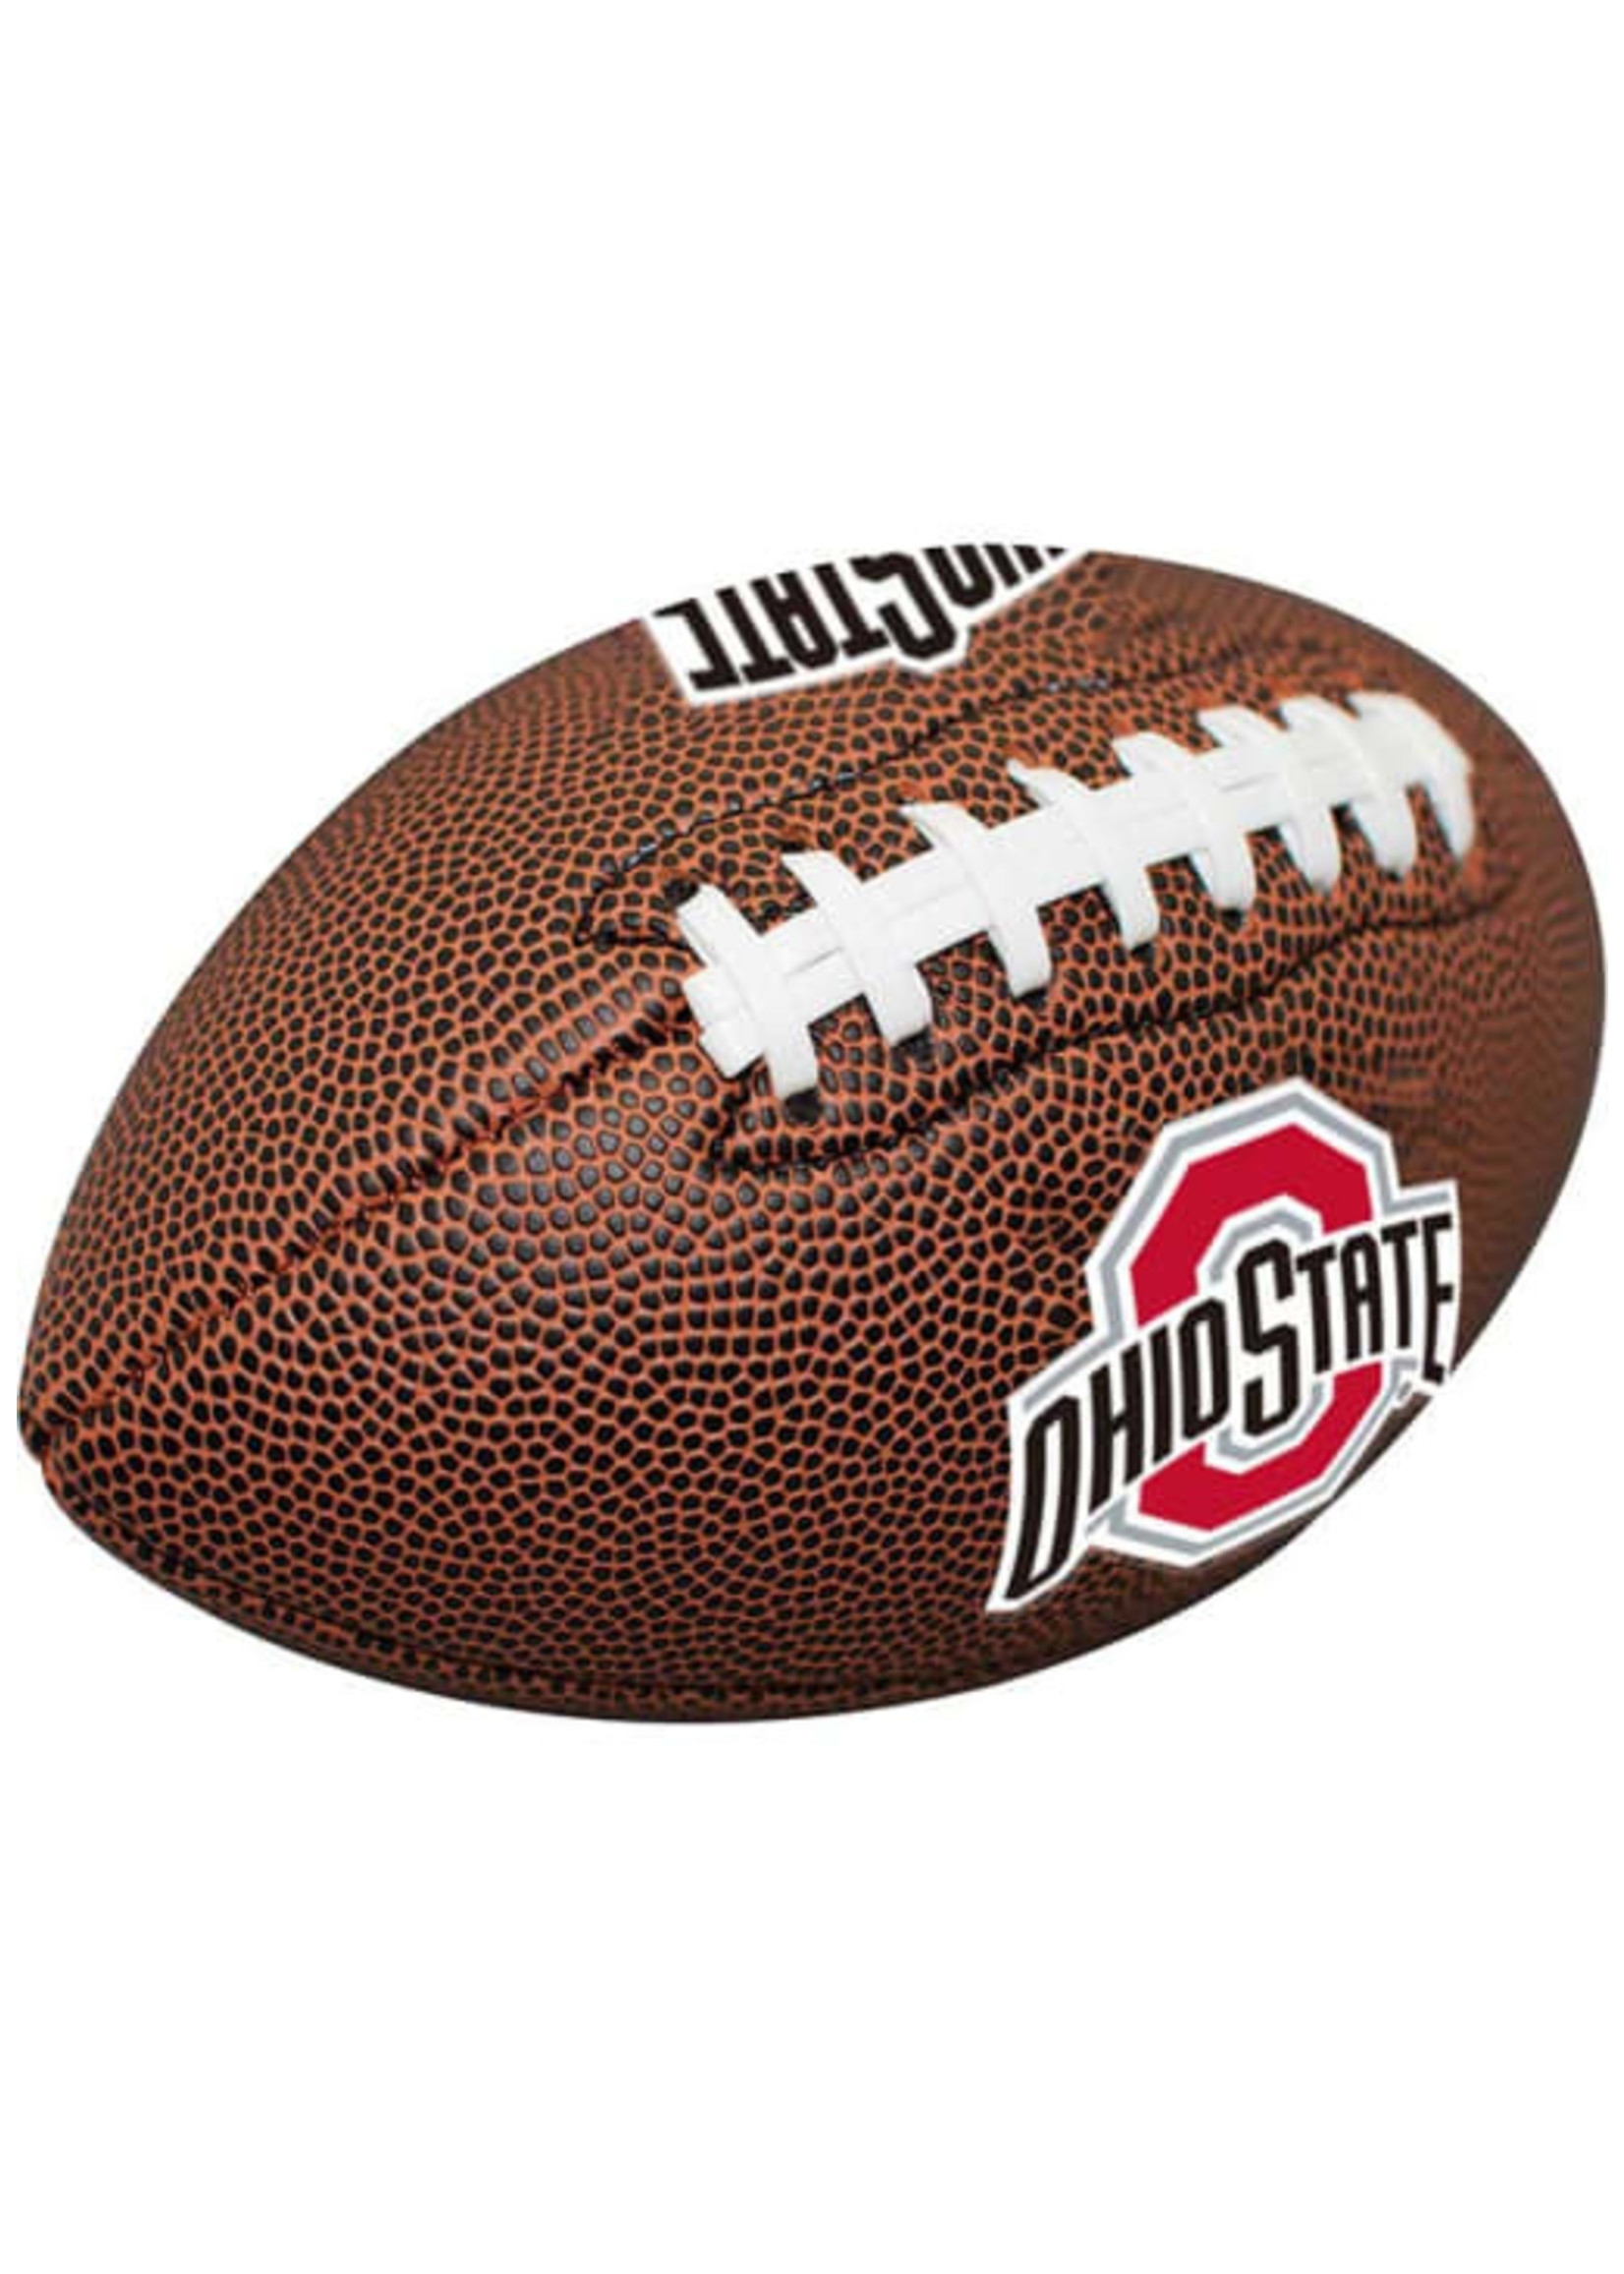 Ohio State mini composite football